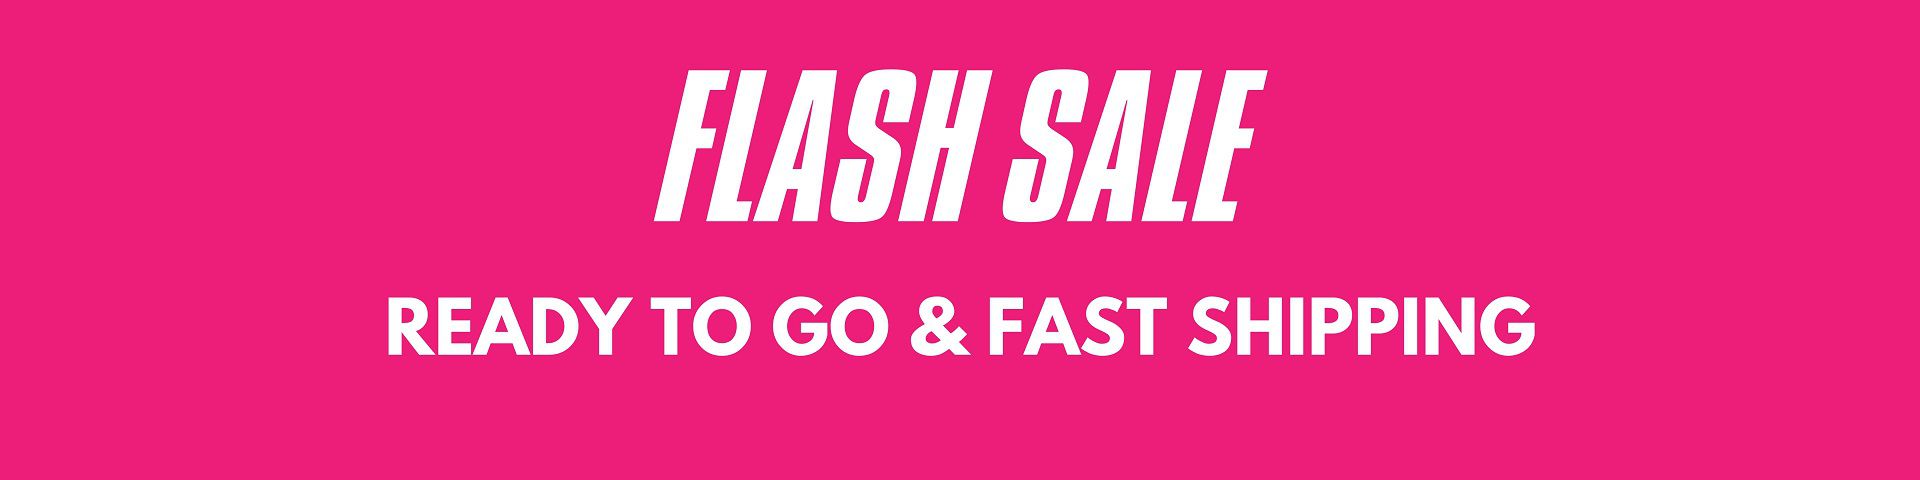 Flash sale - Ready to ship